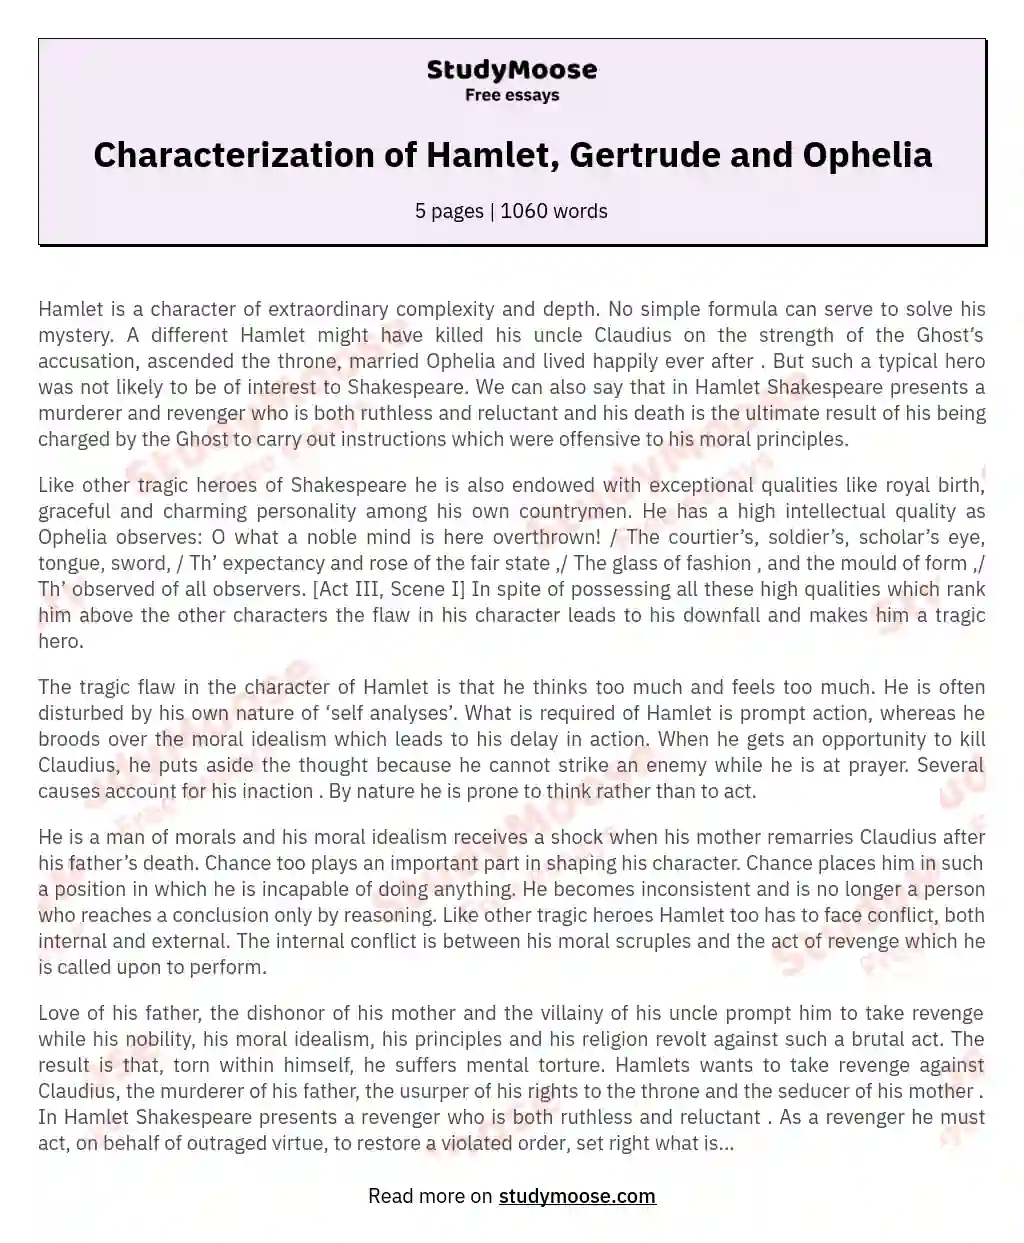 Characterization of Hamlet, Gertrude and Ophelia essay